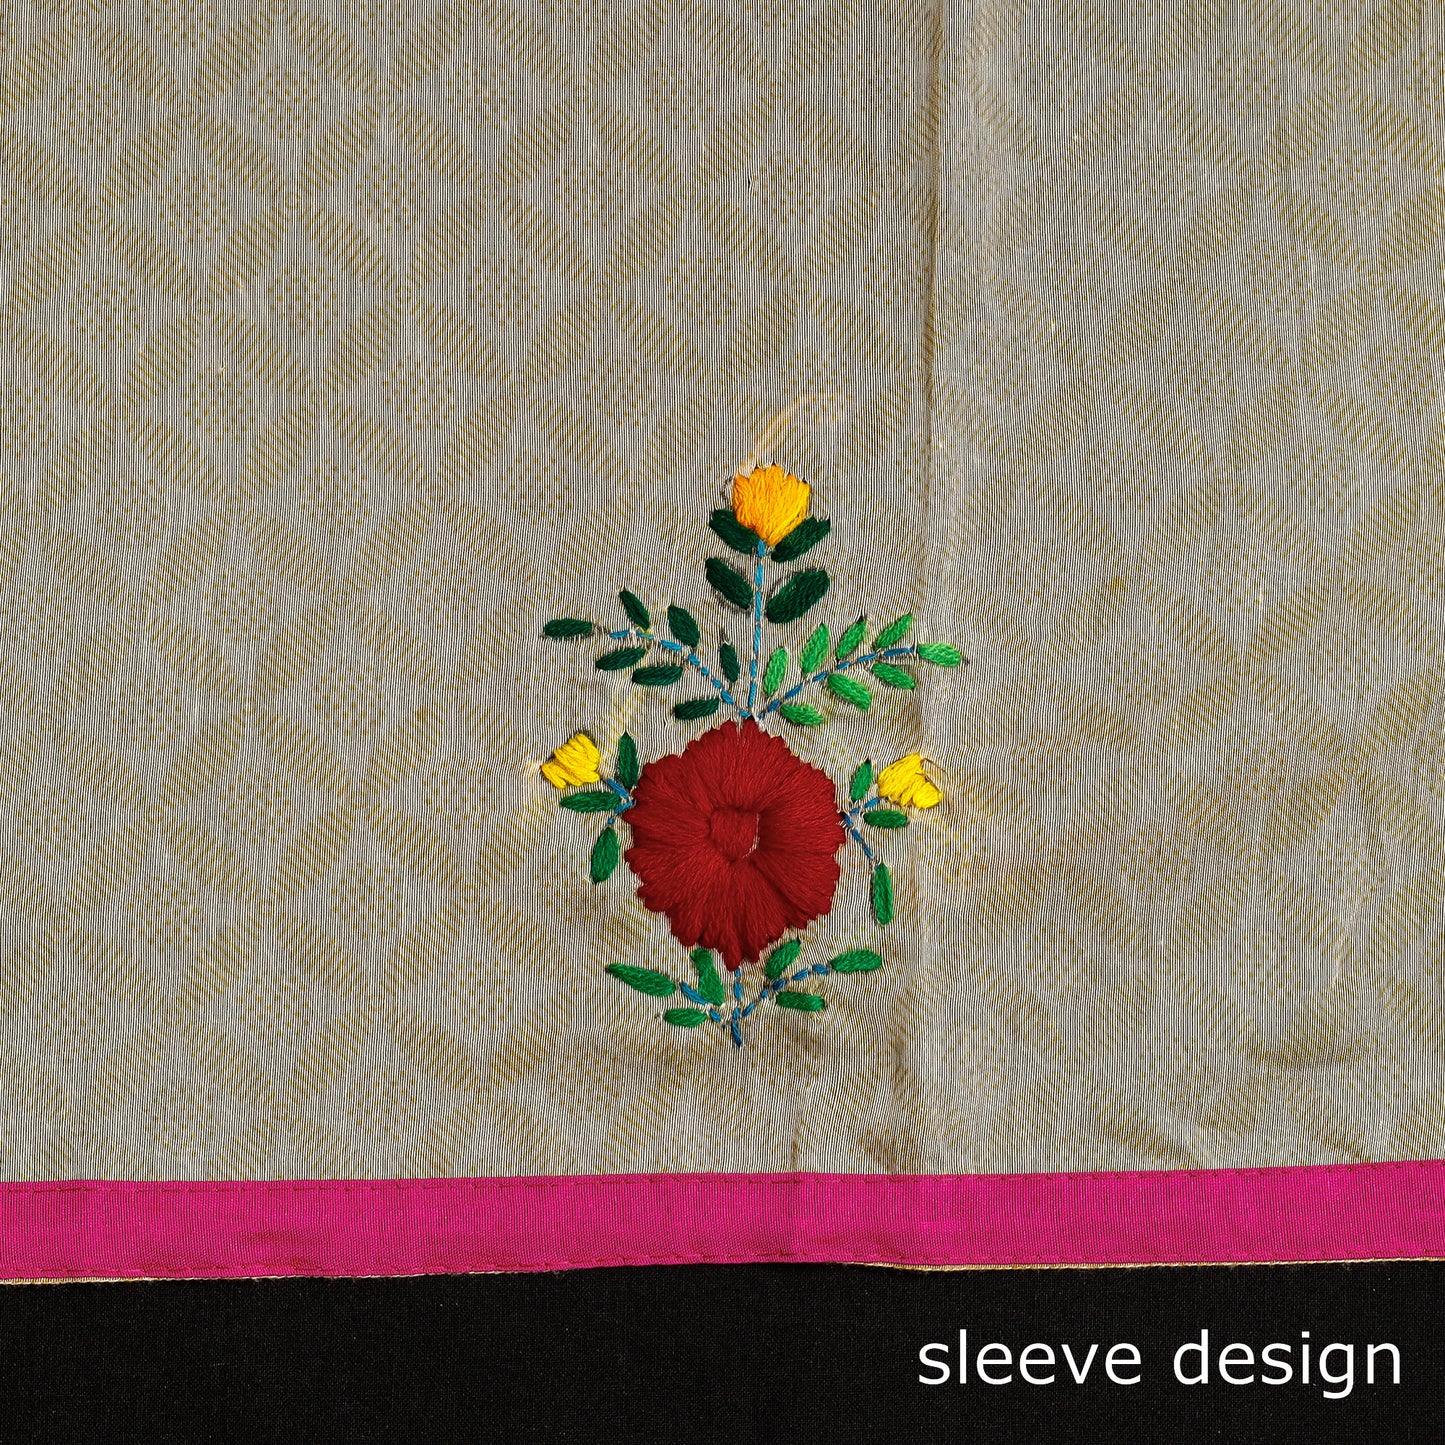 Pink - 3pc Phulkari Embroidery Chapa Work Chanderi Silk Suit Material Set